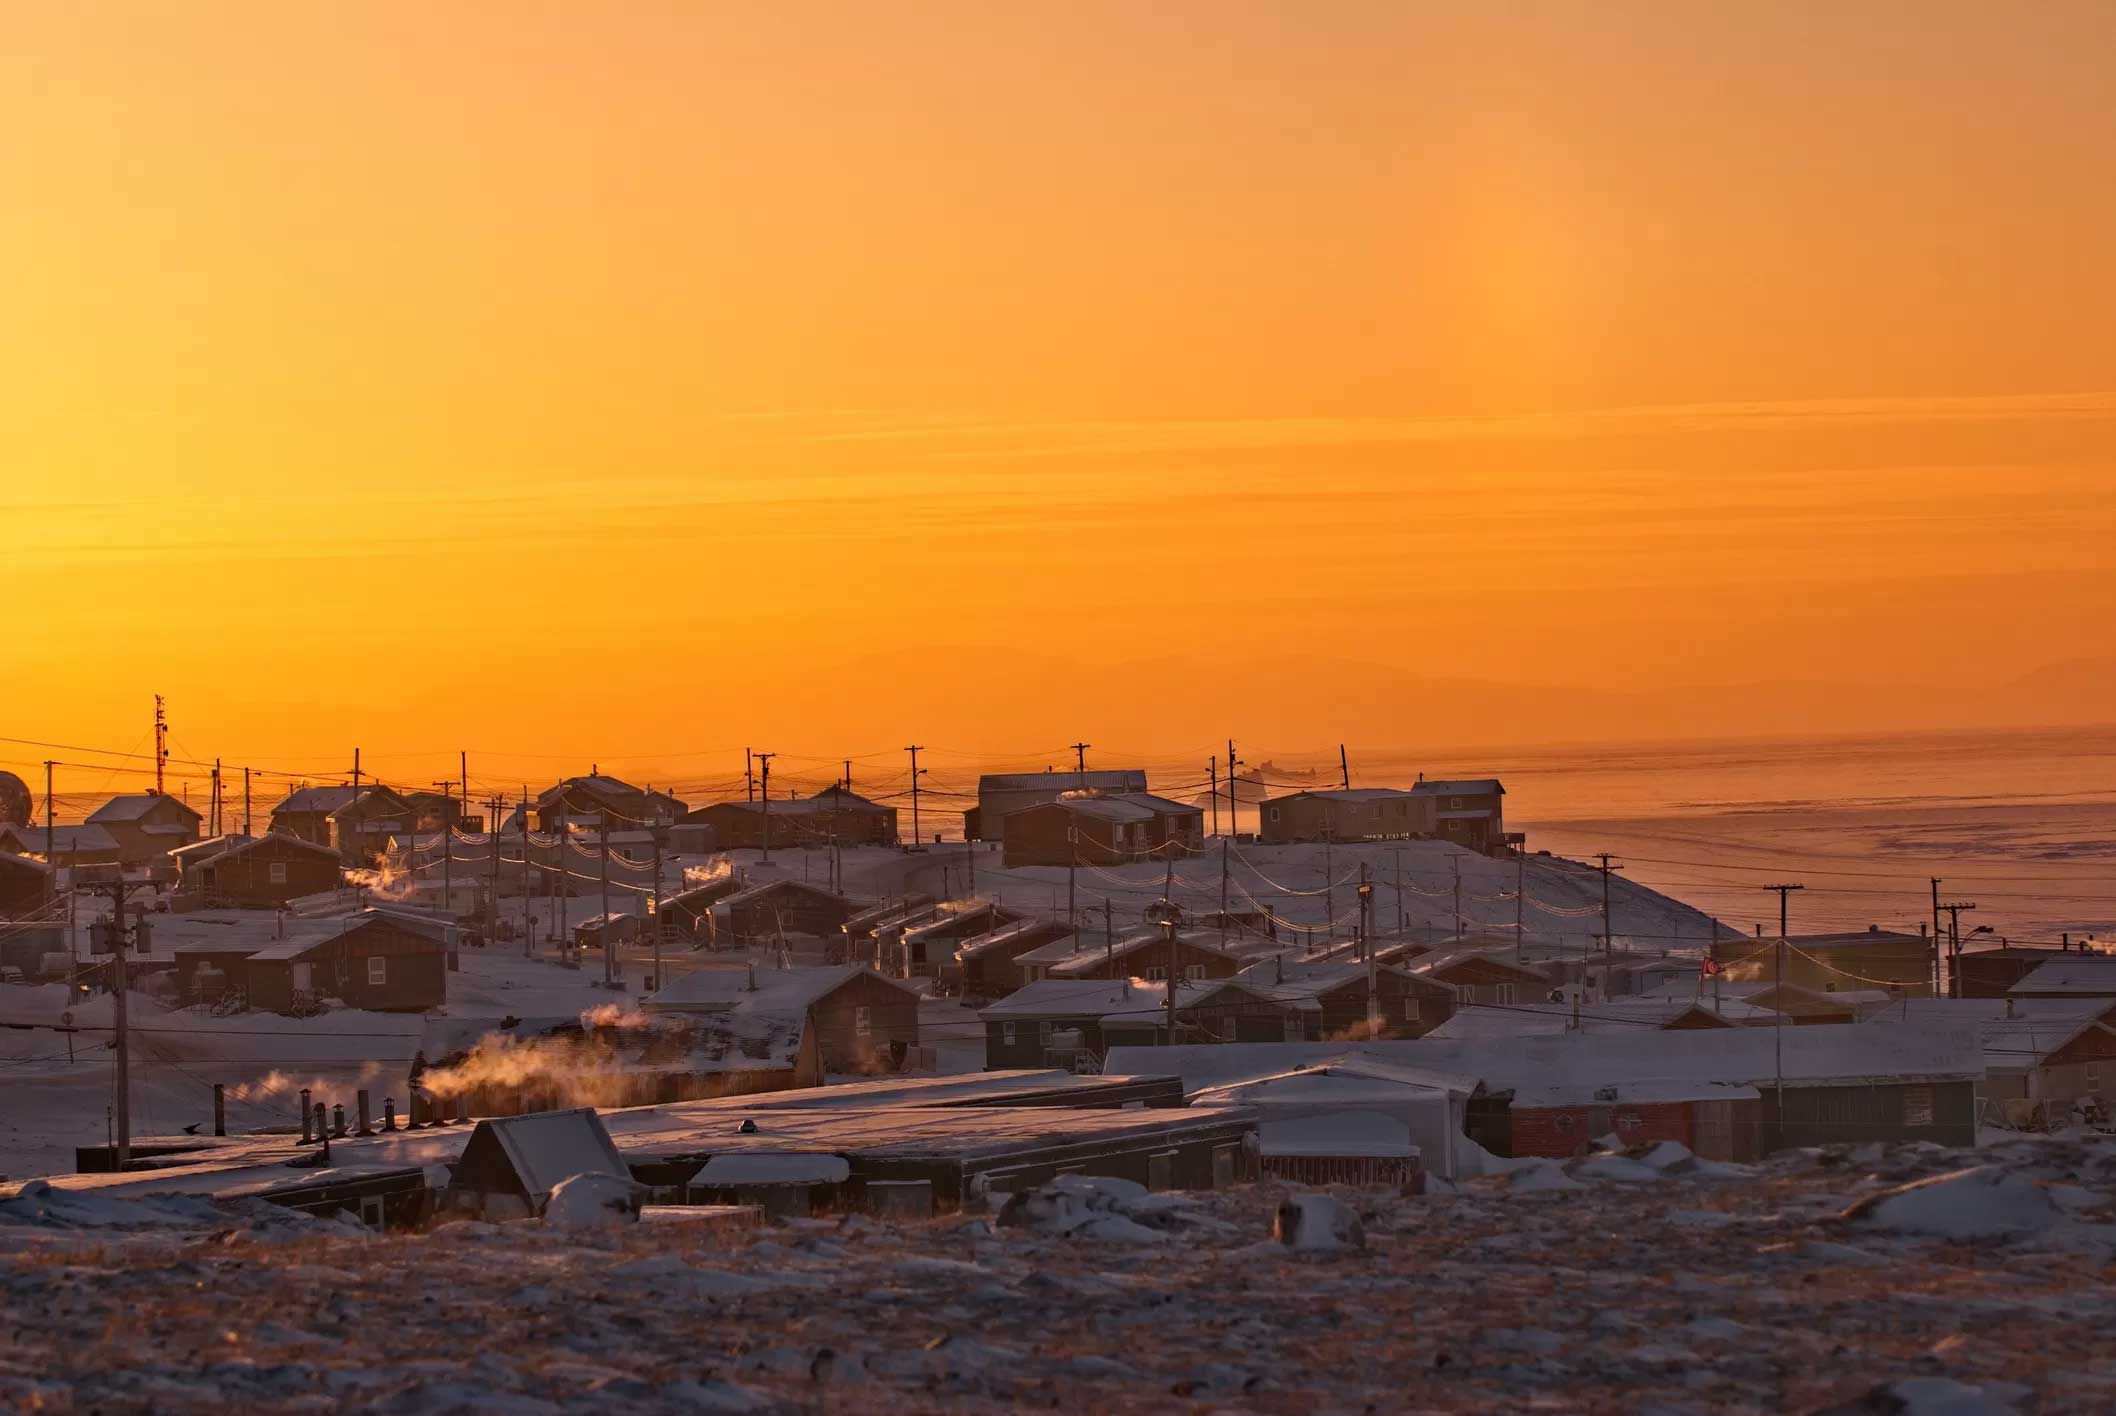 Wide-shot of a sunset over a Baffin Island community in Nunavut, Canada.